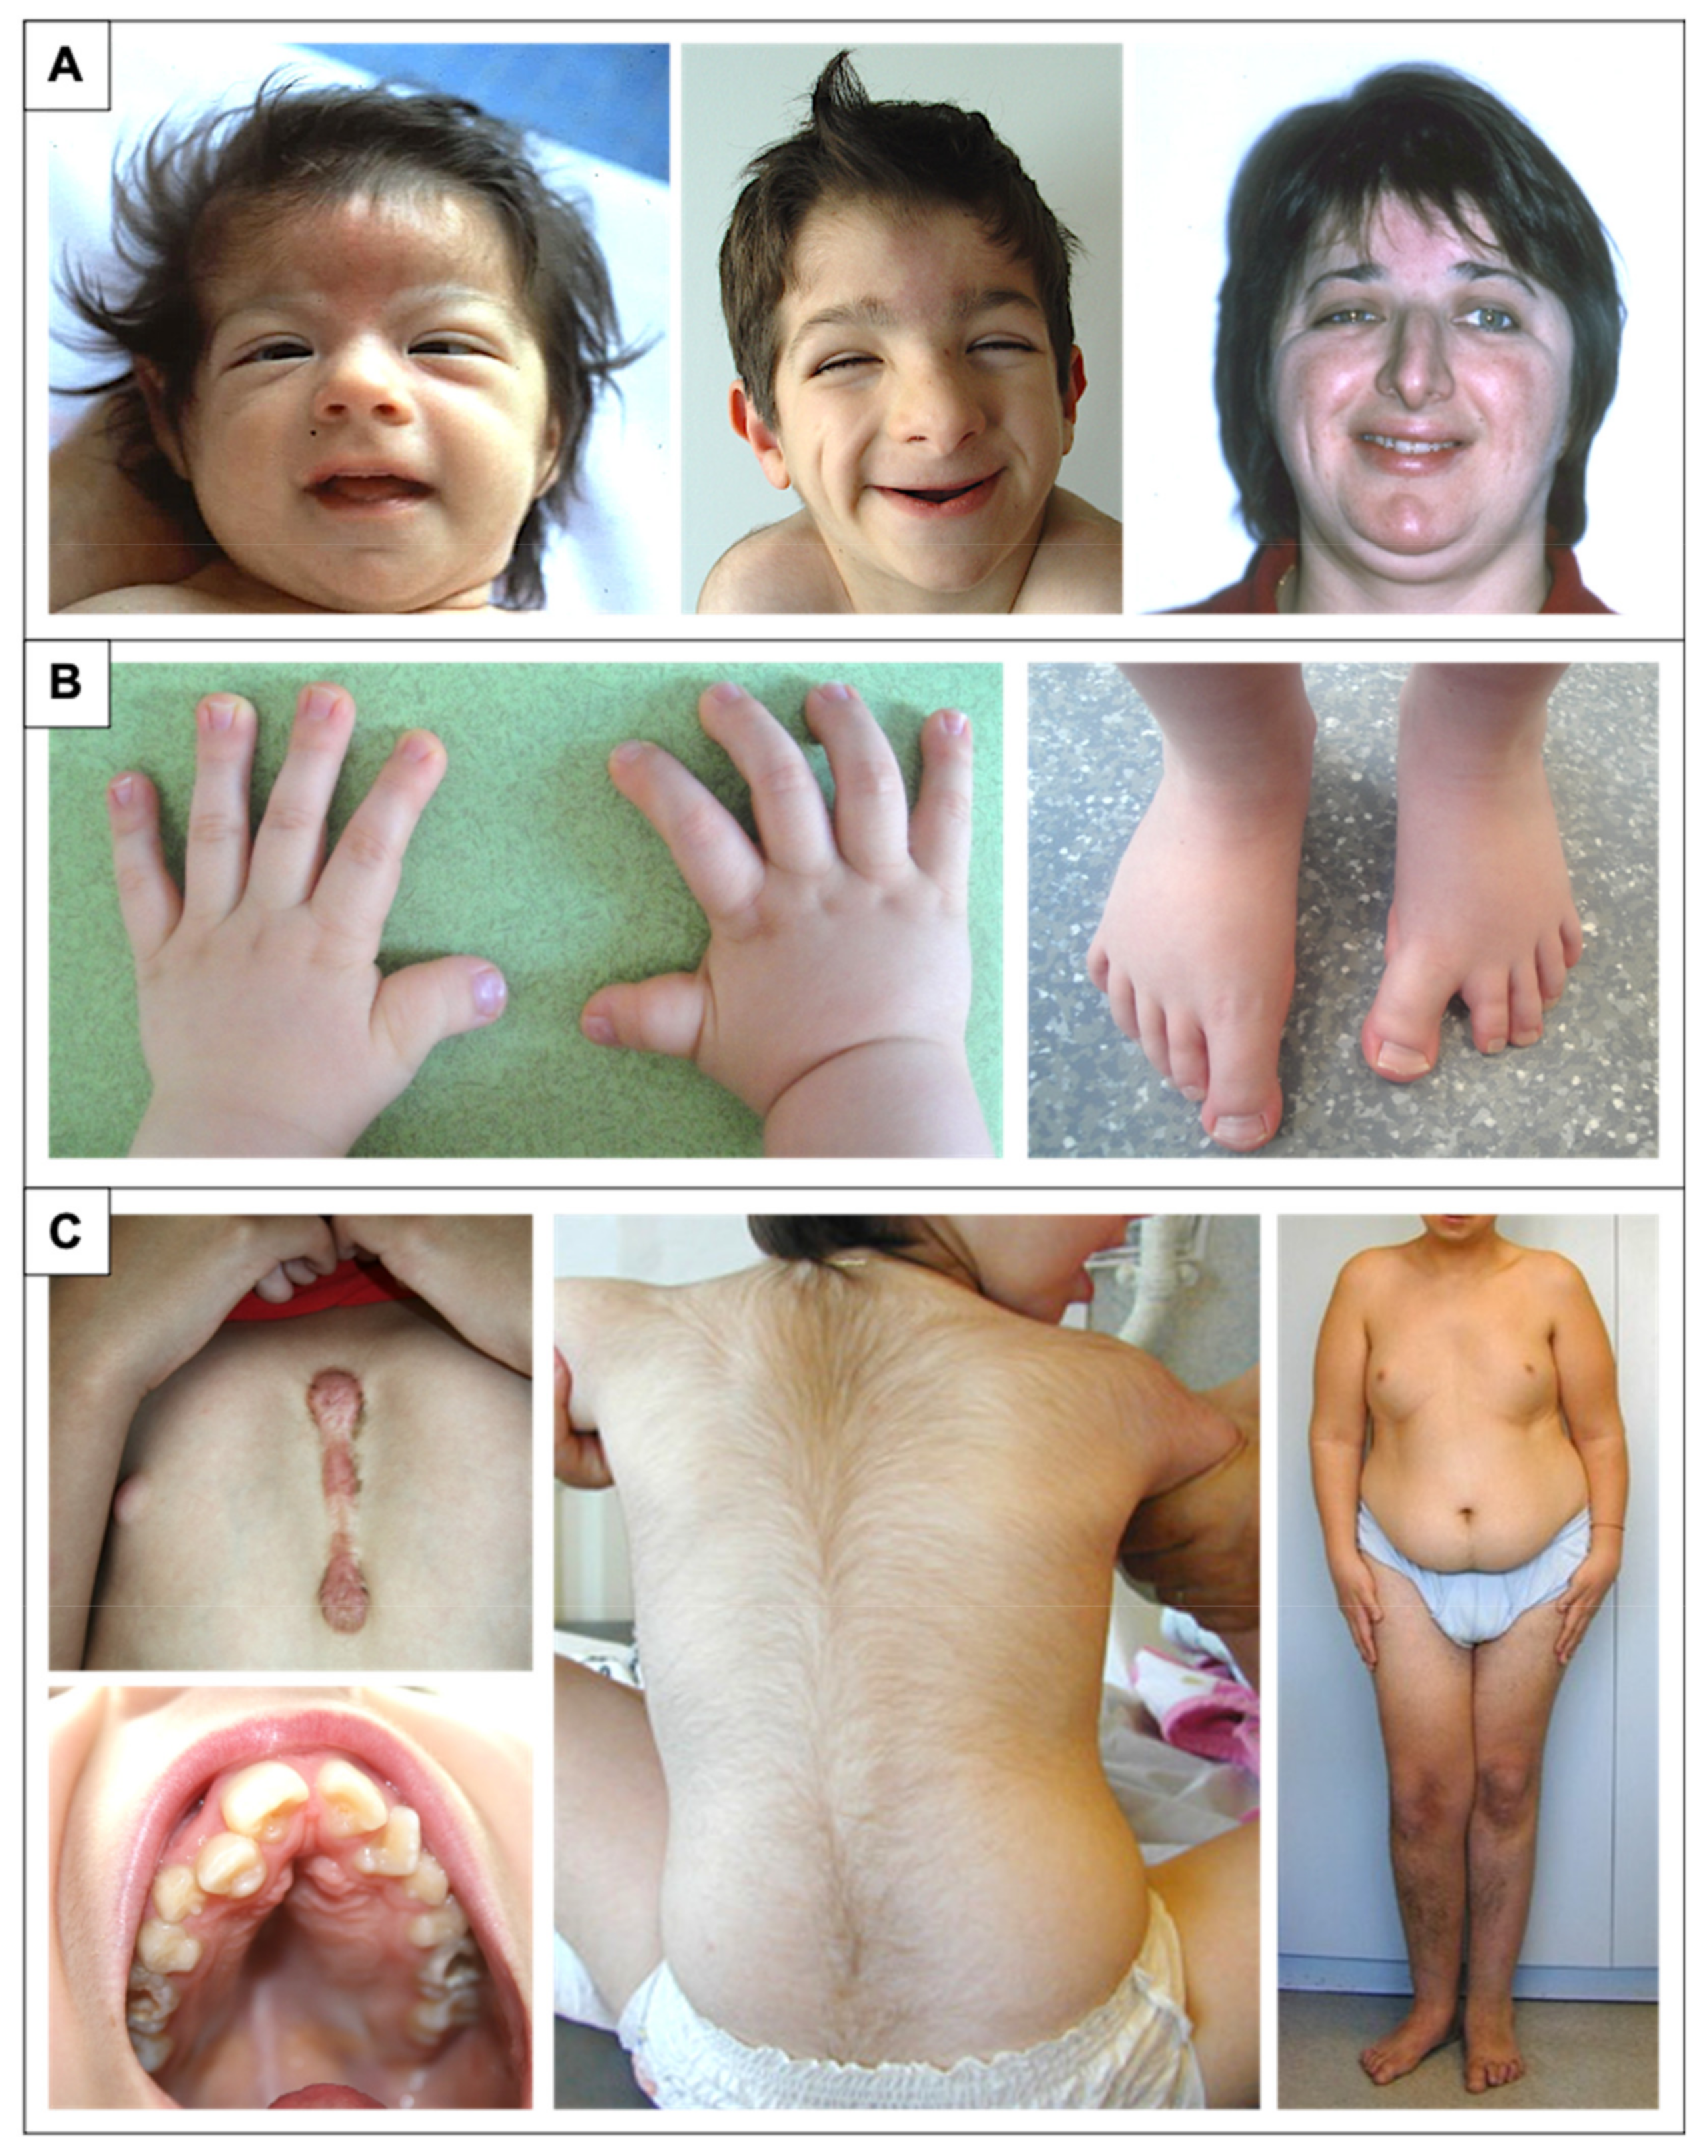 Rubinstein-Taybi syndrome: MedlinePlus Genetics